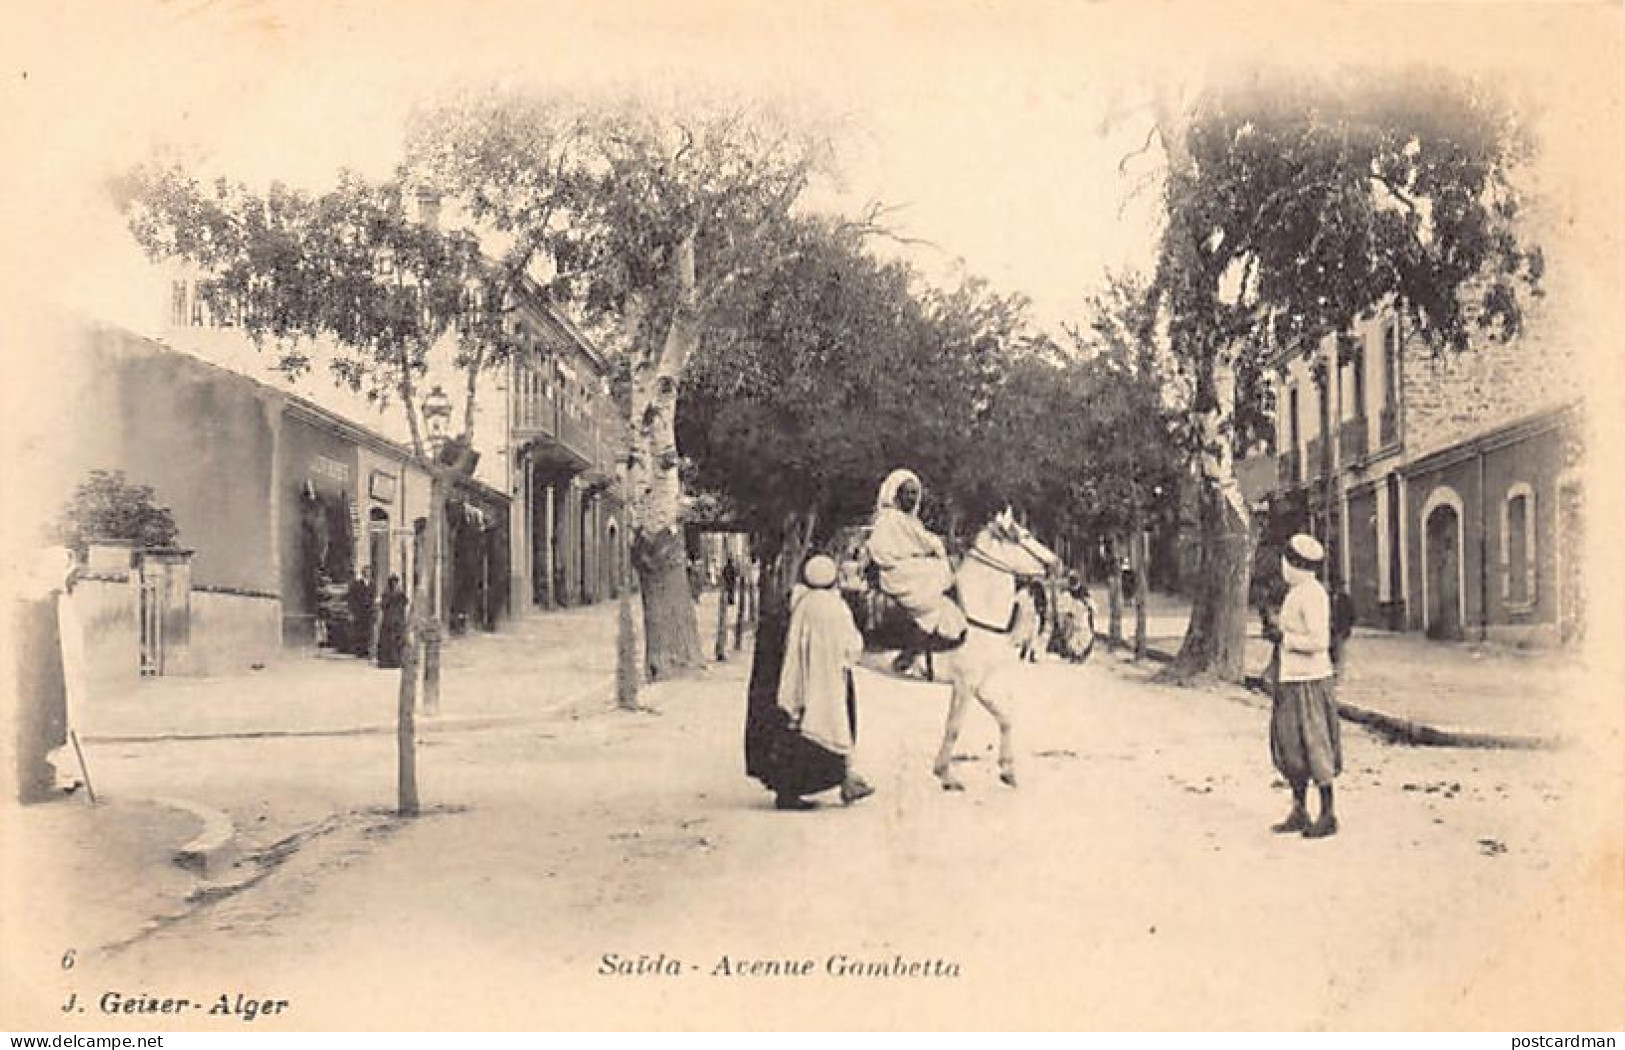 SAIDA - Avenue Nue Gambetta - Saïda